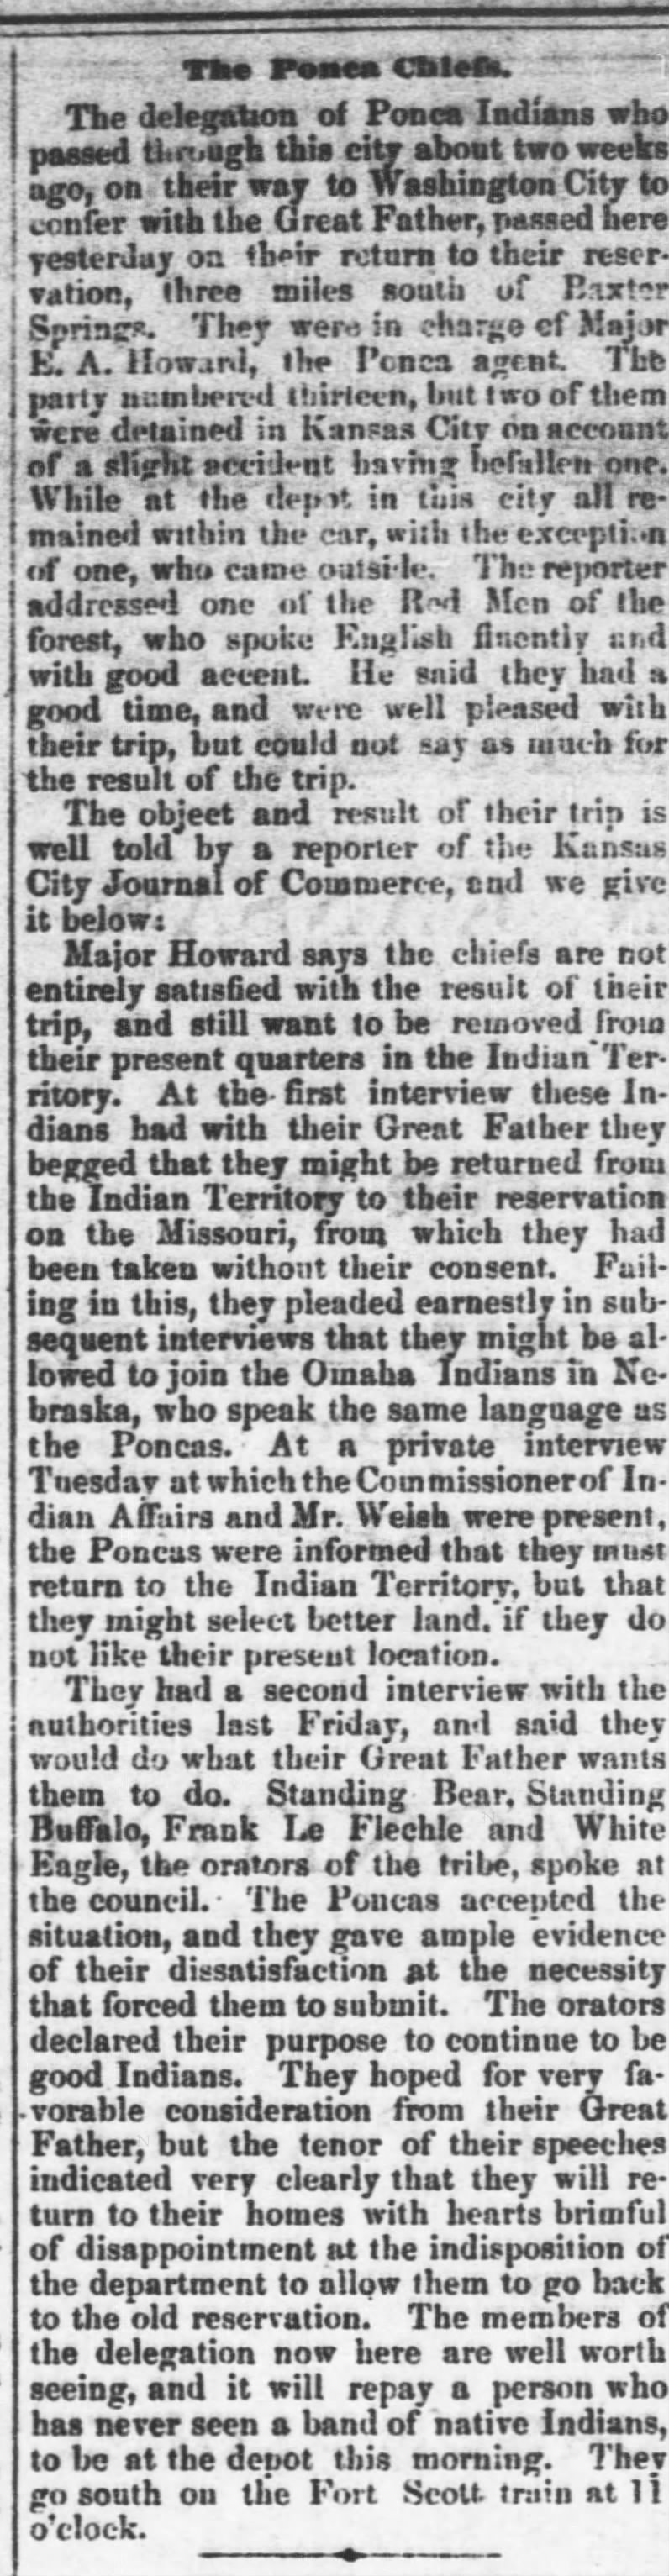 Fort Scott (KS) Daily Monitor, 23 Nov 1877 p. 4 returning from WDC disapp'ted